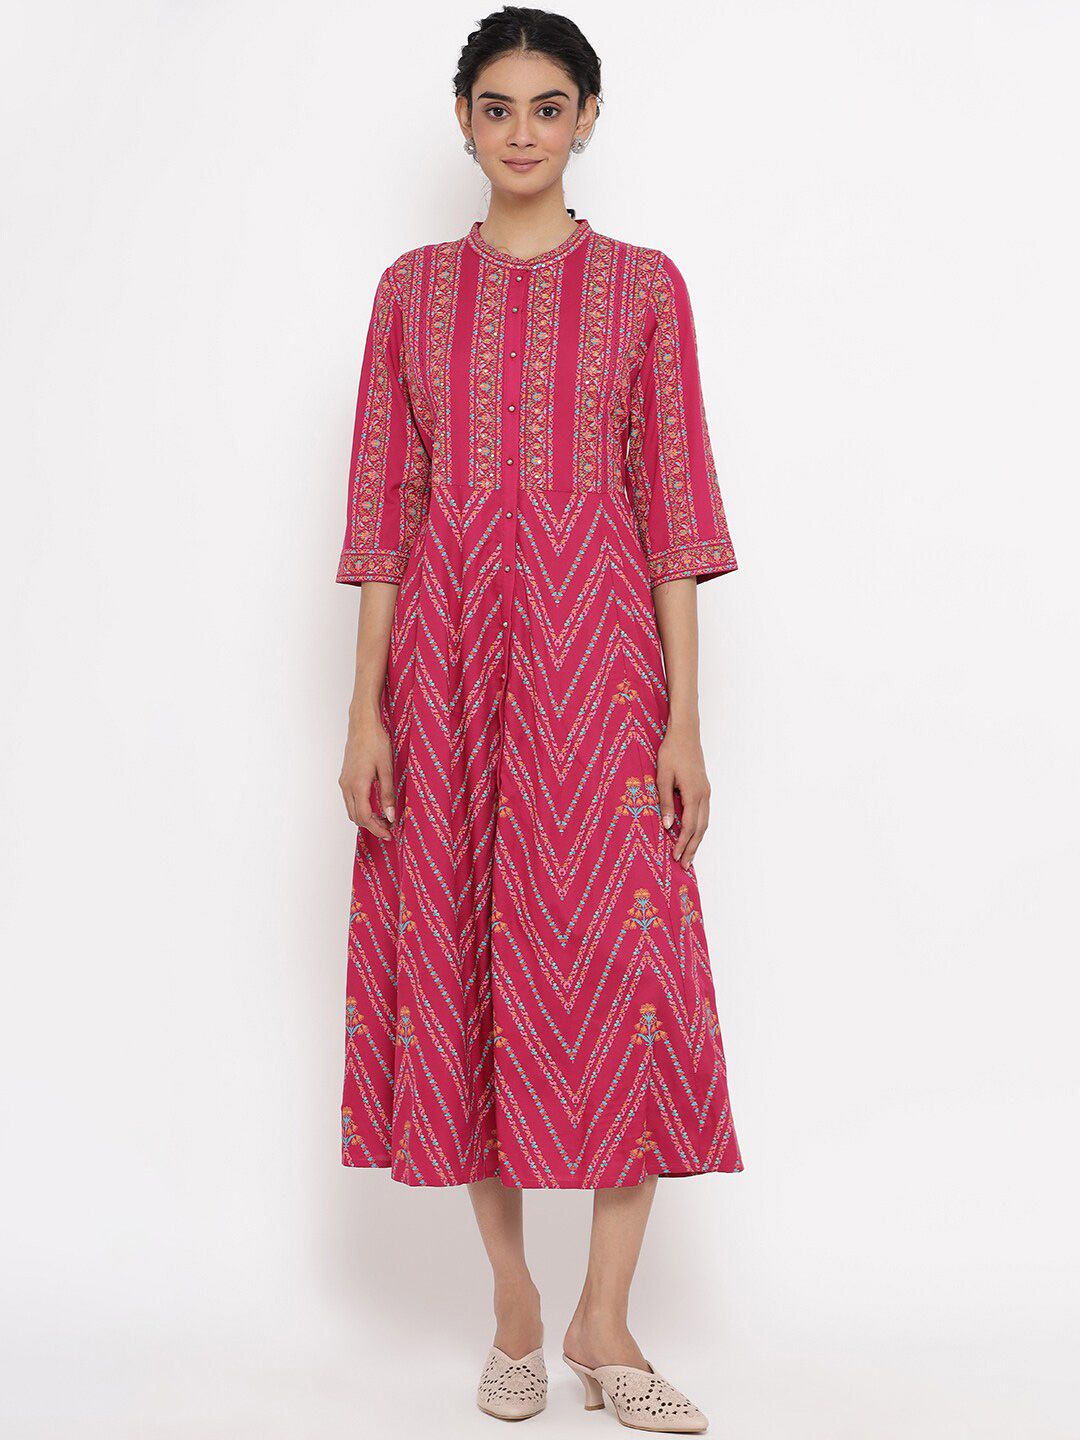 W Women Fuchsia & Pink Ethnic Motifs Ethnic A-Line Midi Dress Price in India